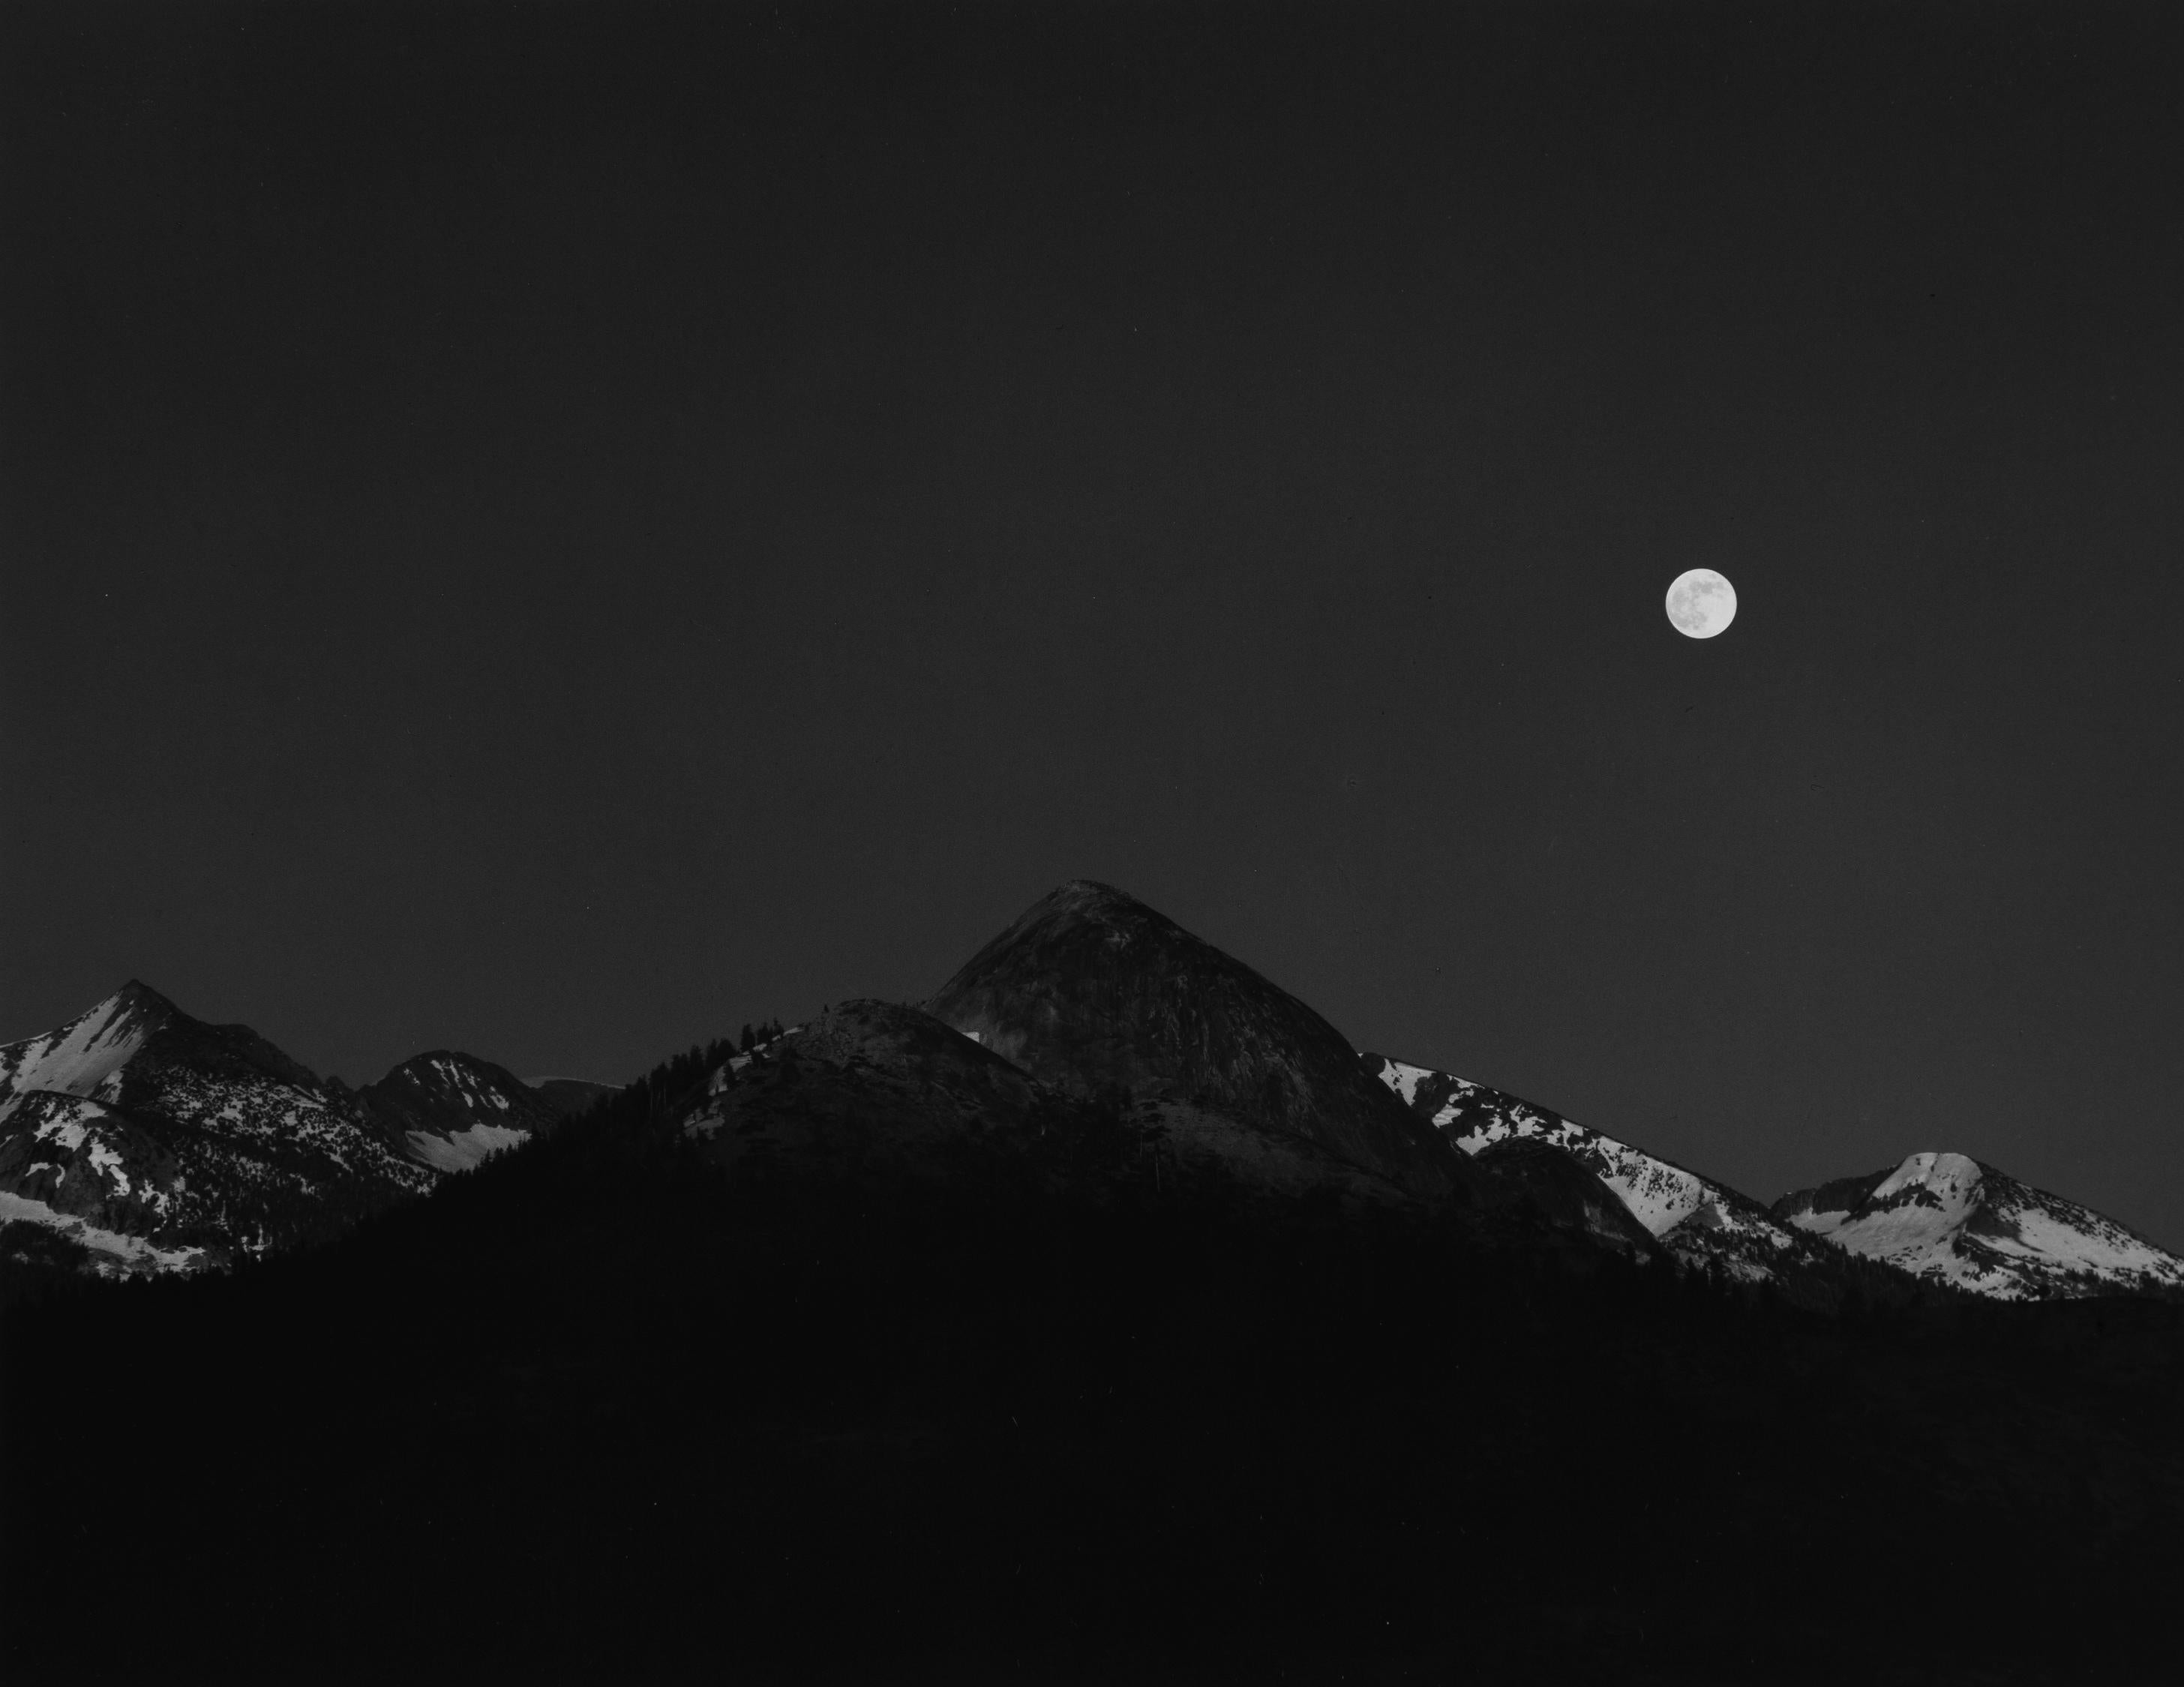 Ansel Adams Landscape Photograph - Moonrise from Glacier Point, Yosemite National Park, California